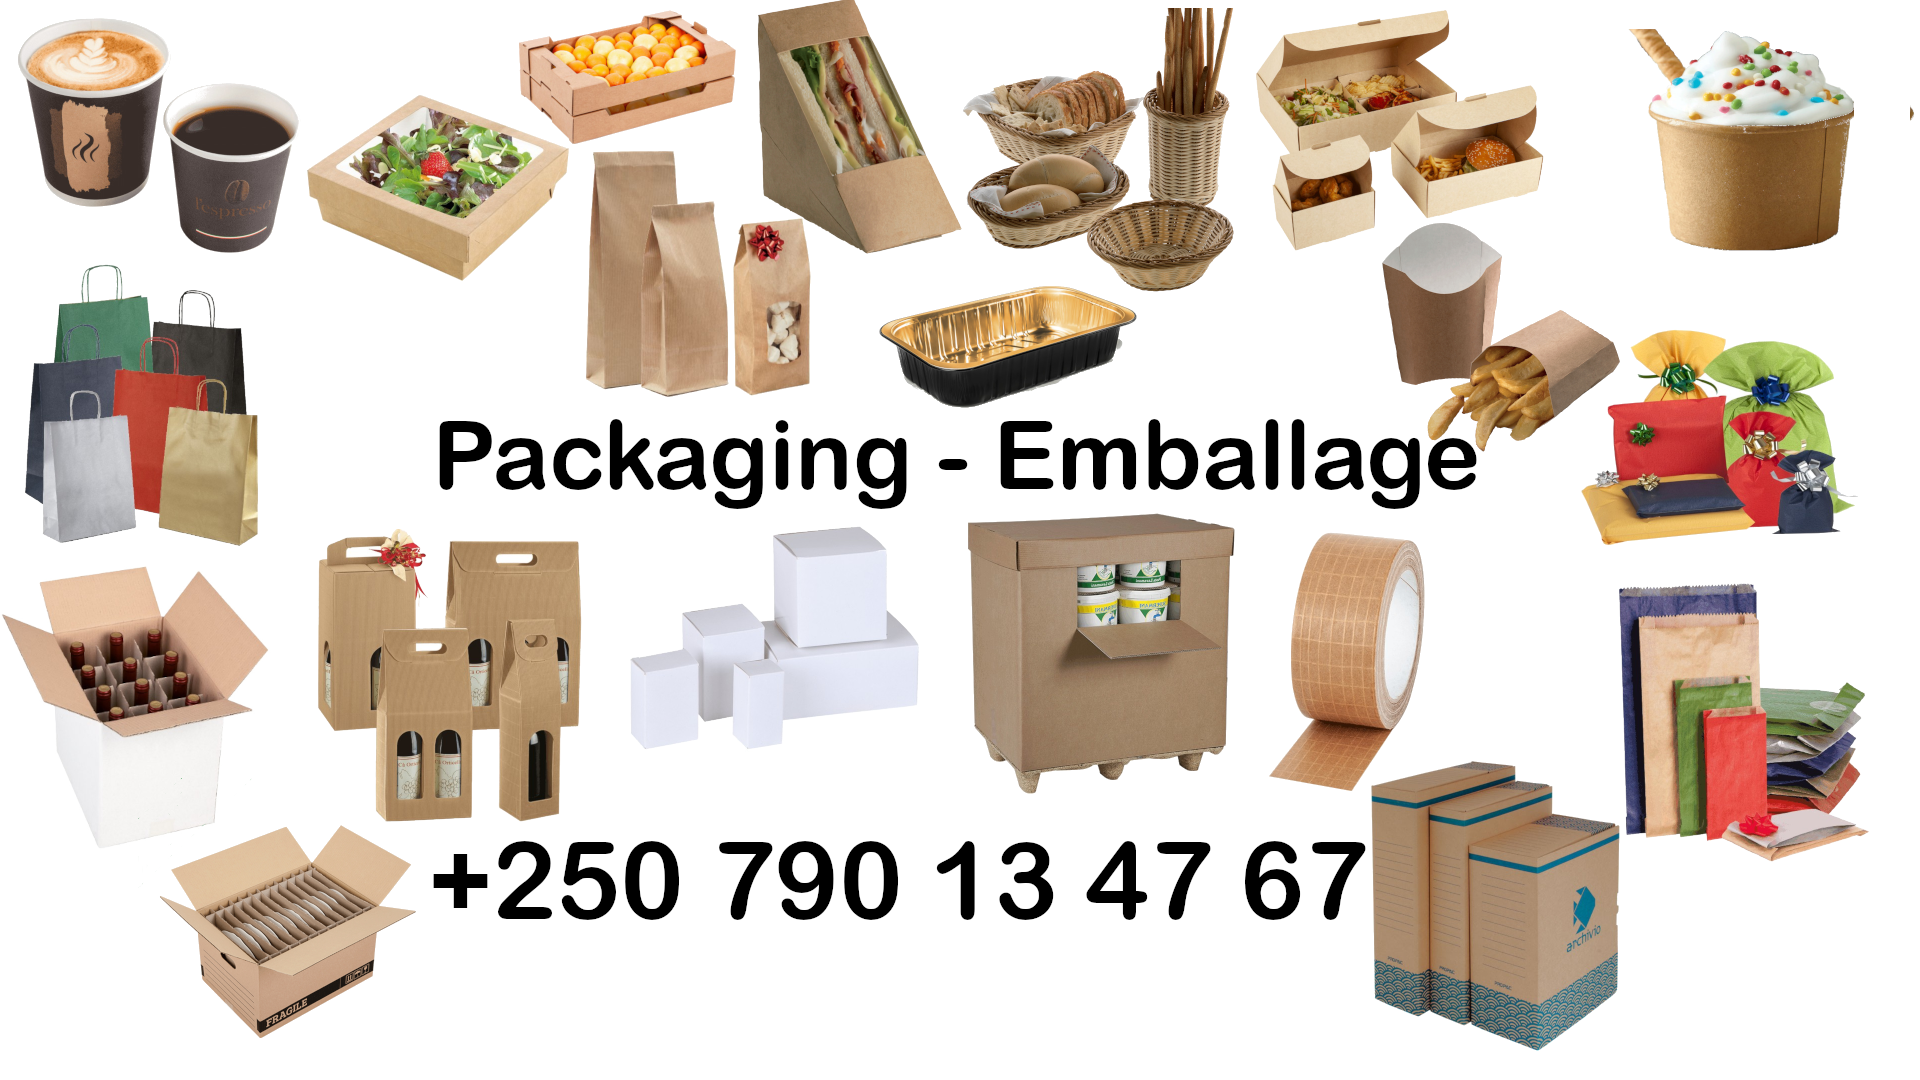 Packaging emballage +250 790 13 47 67